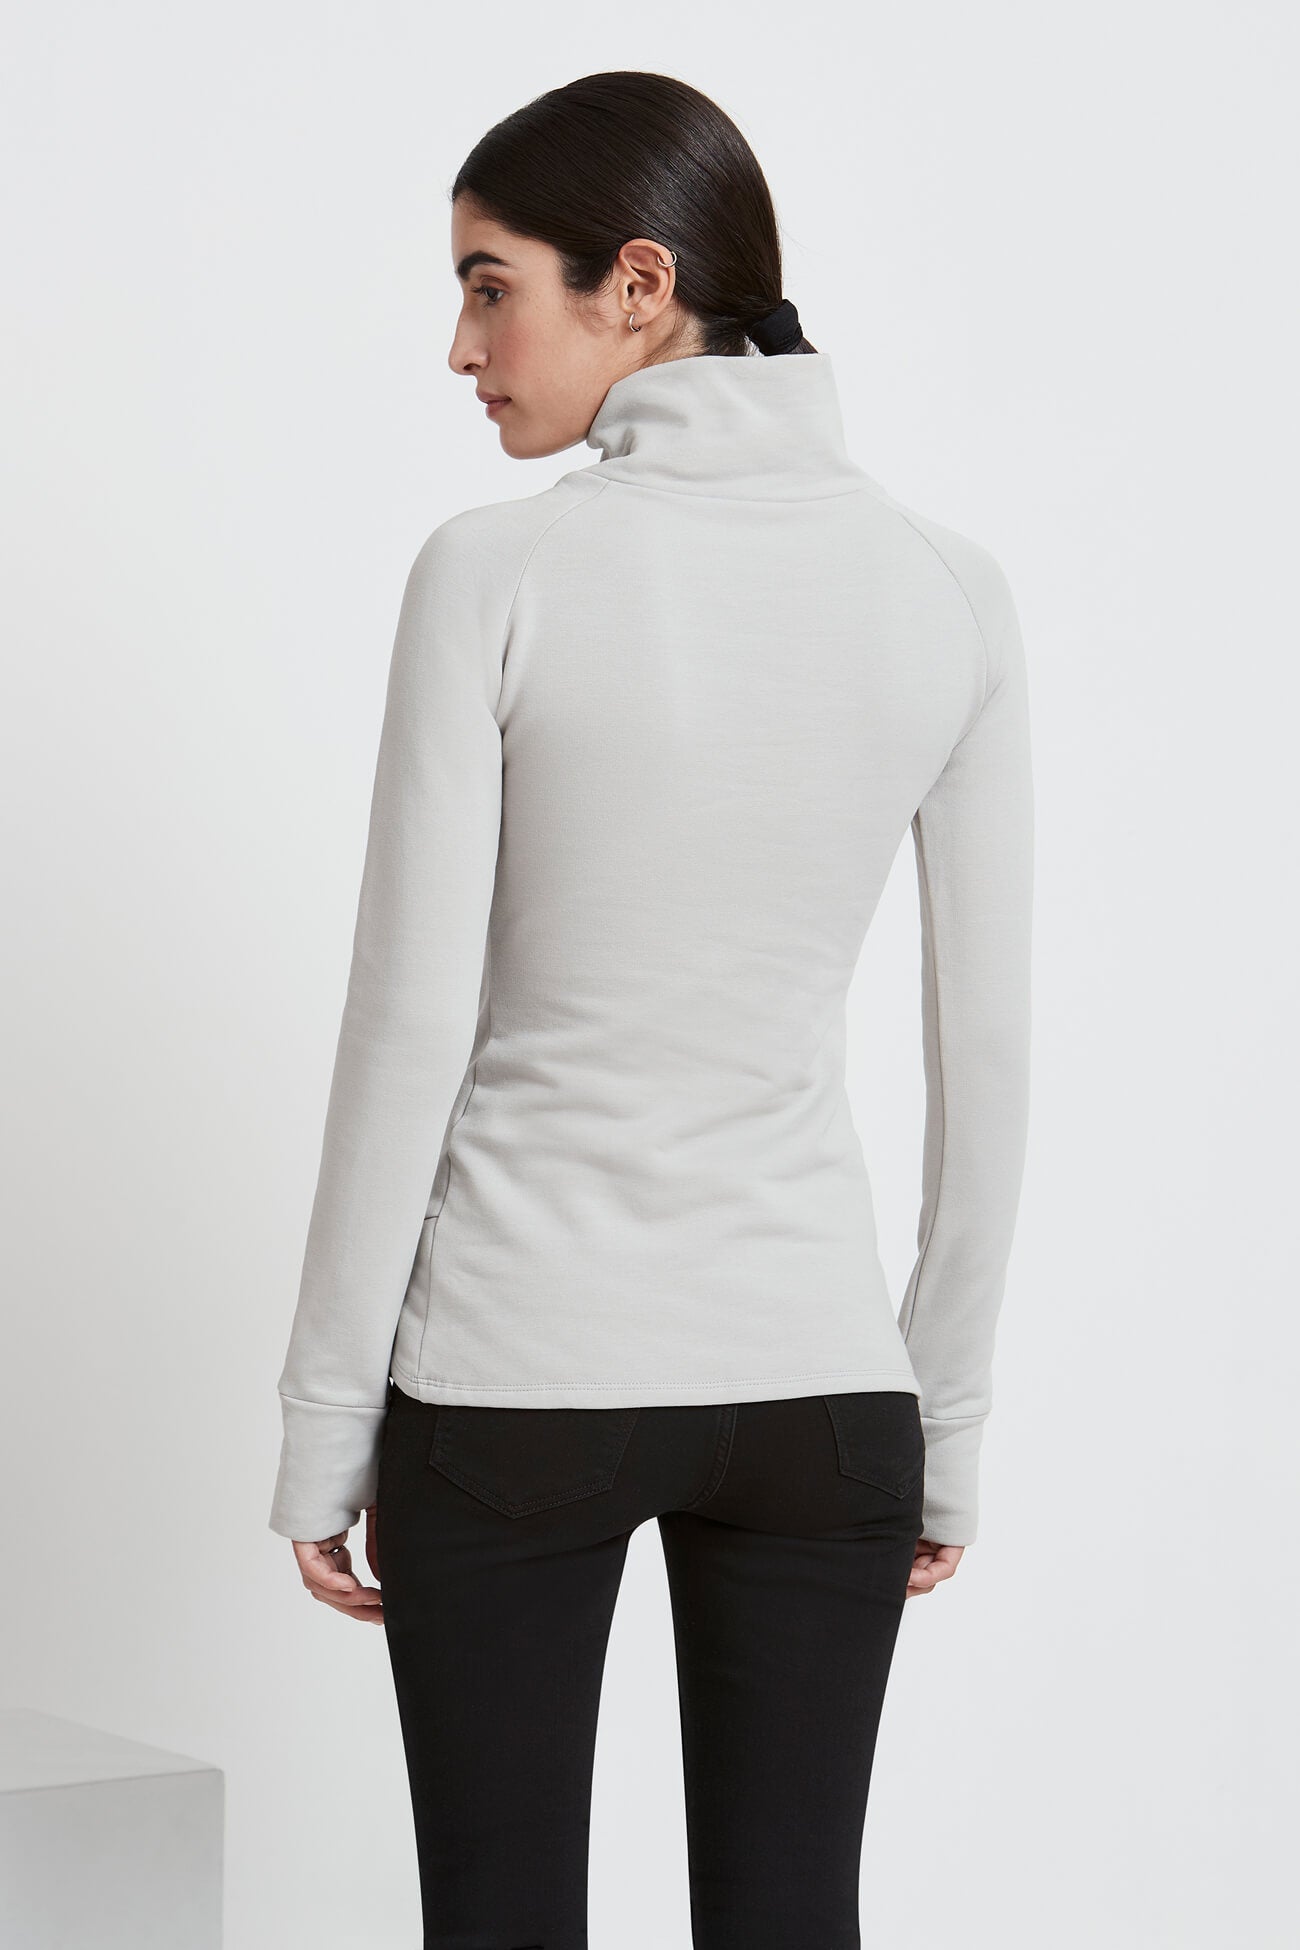 Sleek Grey Loungewear - Brie Sweatshirt | Marcella